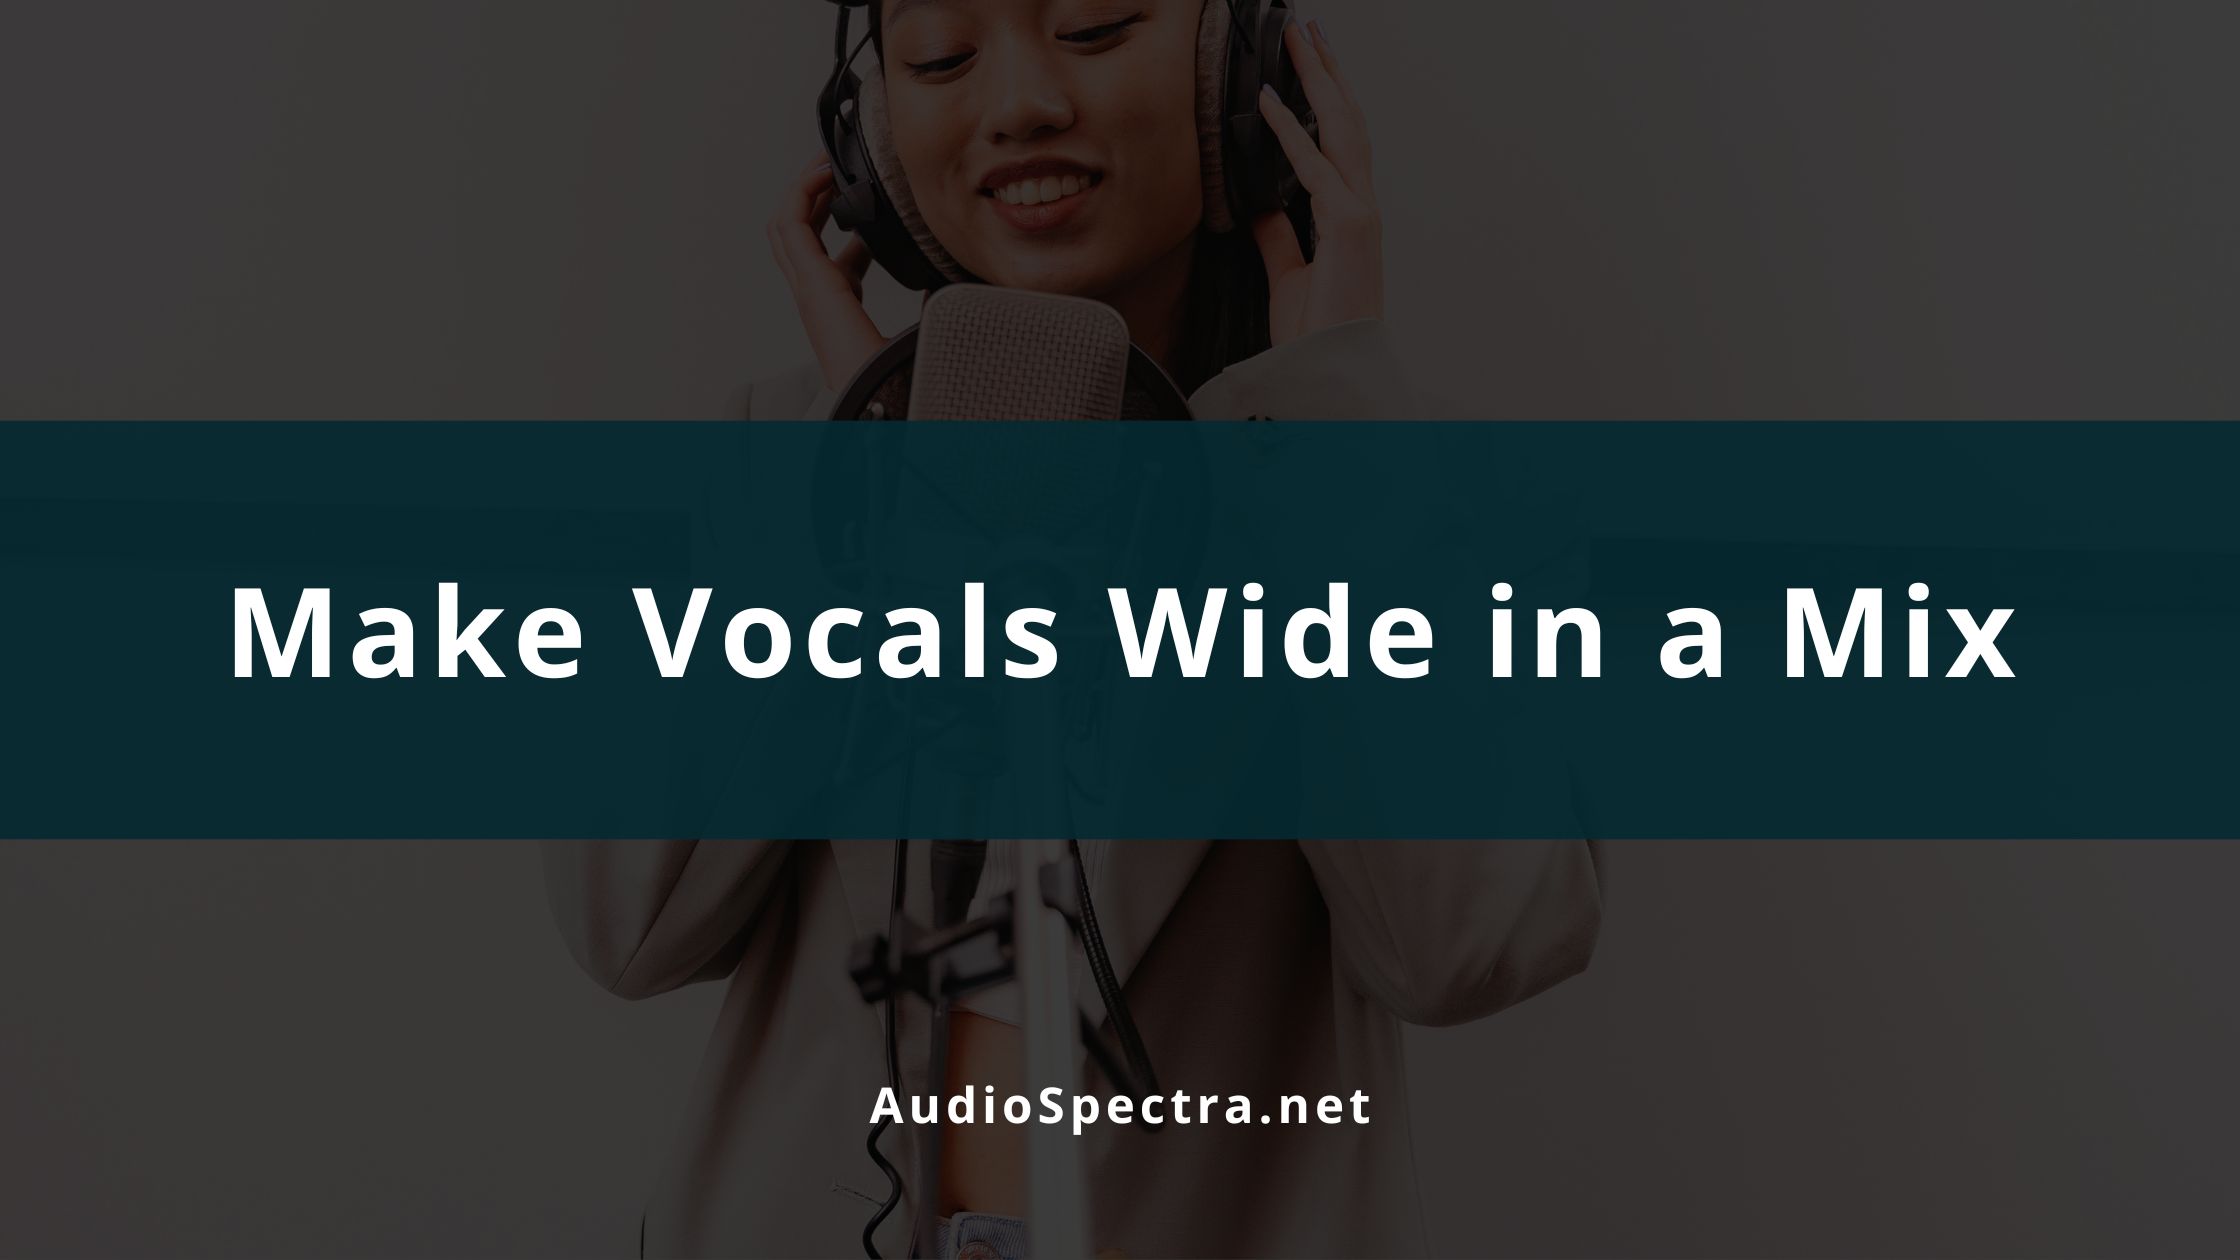 5 Easy Ways To Make Vocals Wide in a Mix